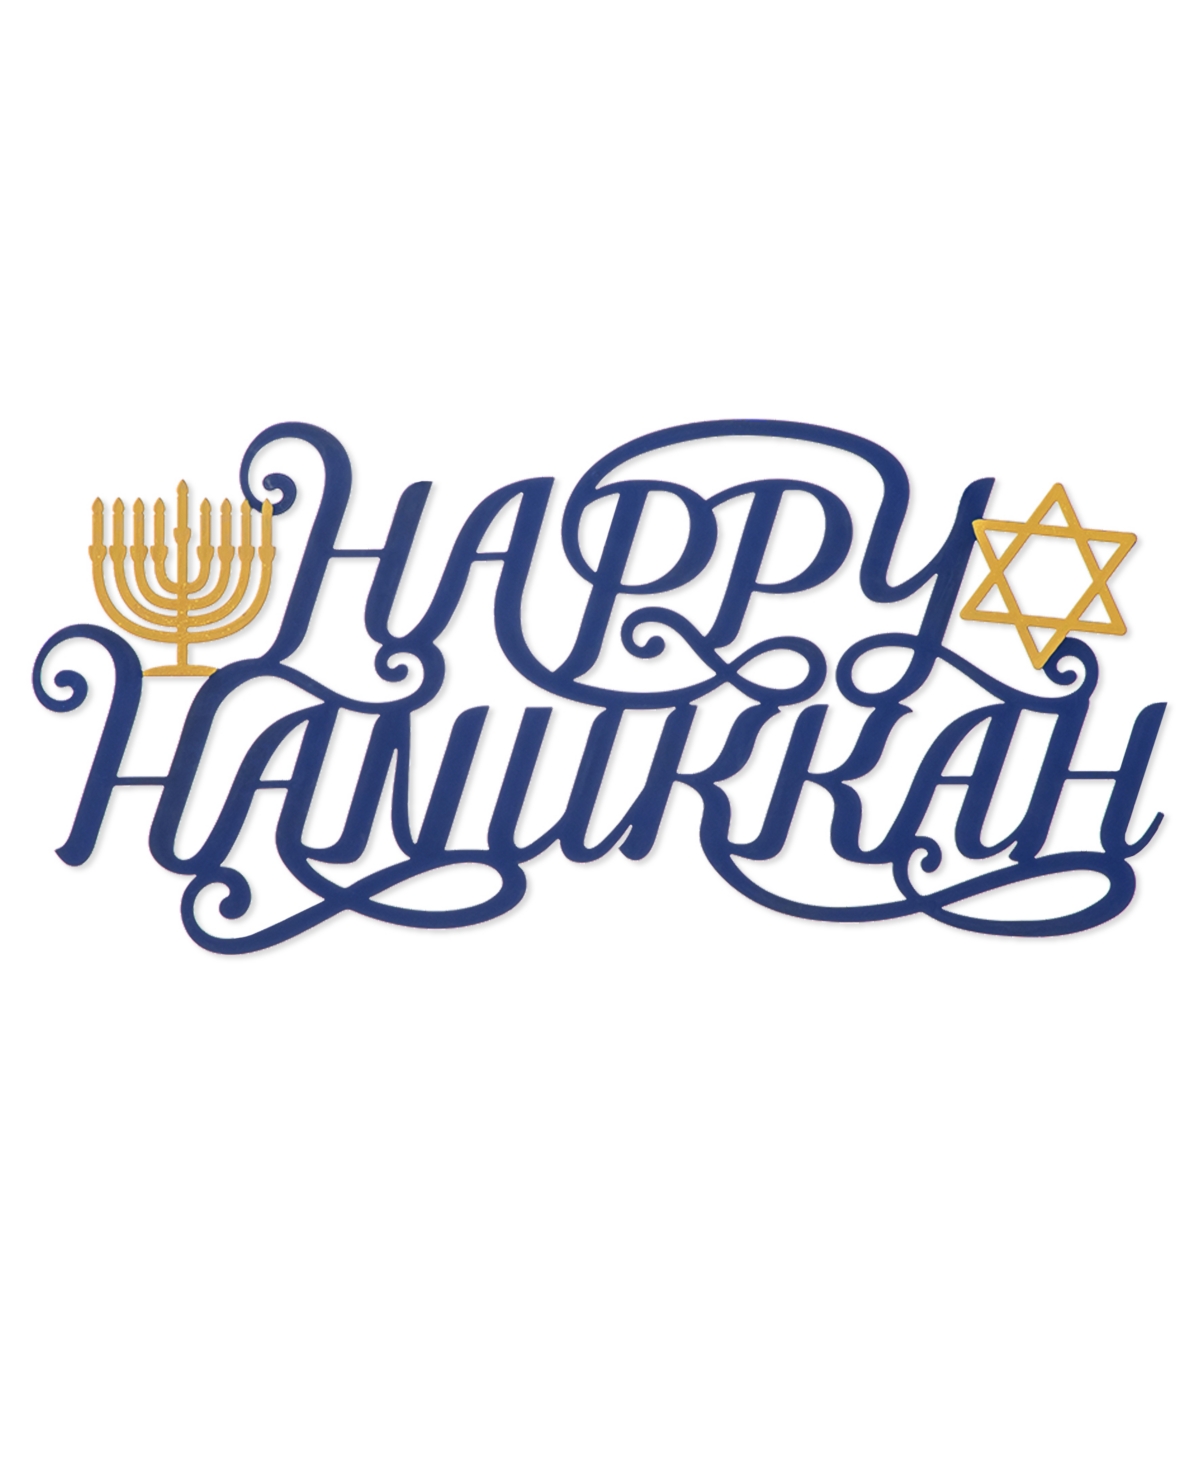 24" L Metal "Happy Hanukkah" Wall Decor - Multi